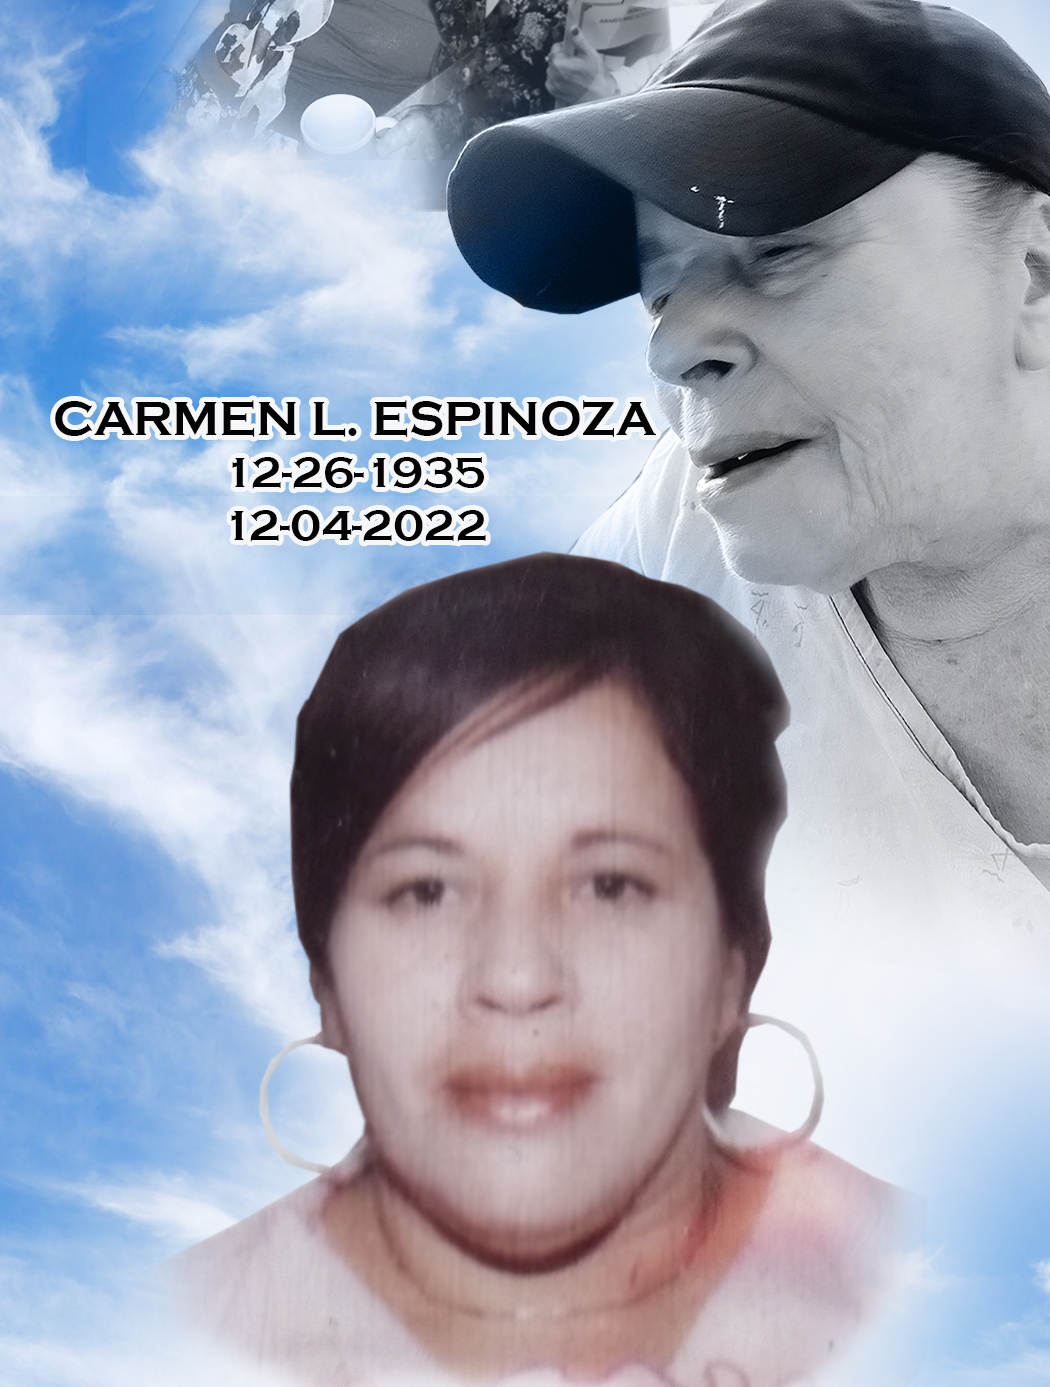 Carmen Espinoza